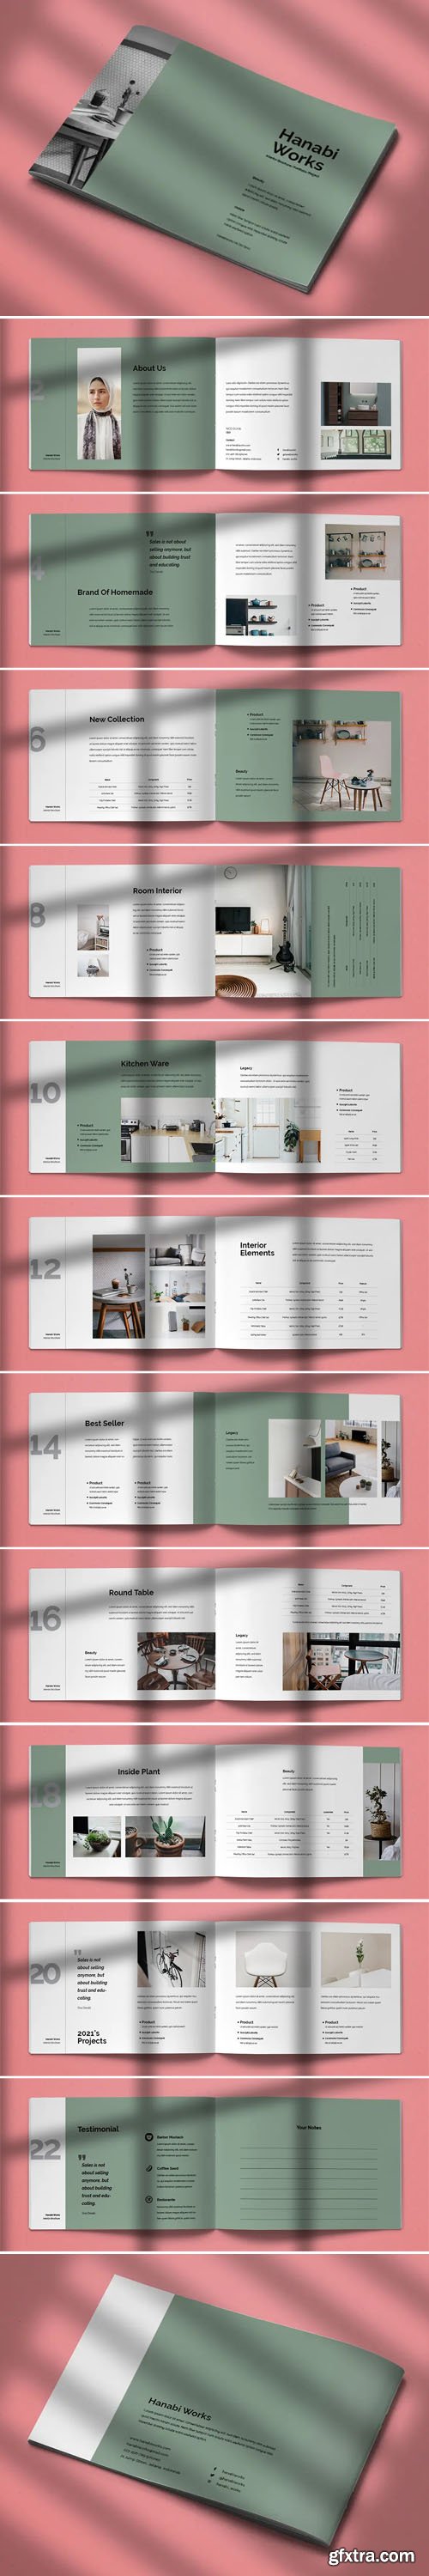 Hanabi Works - Interior Brochure Indesign Template [24-Pages]